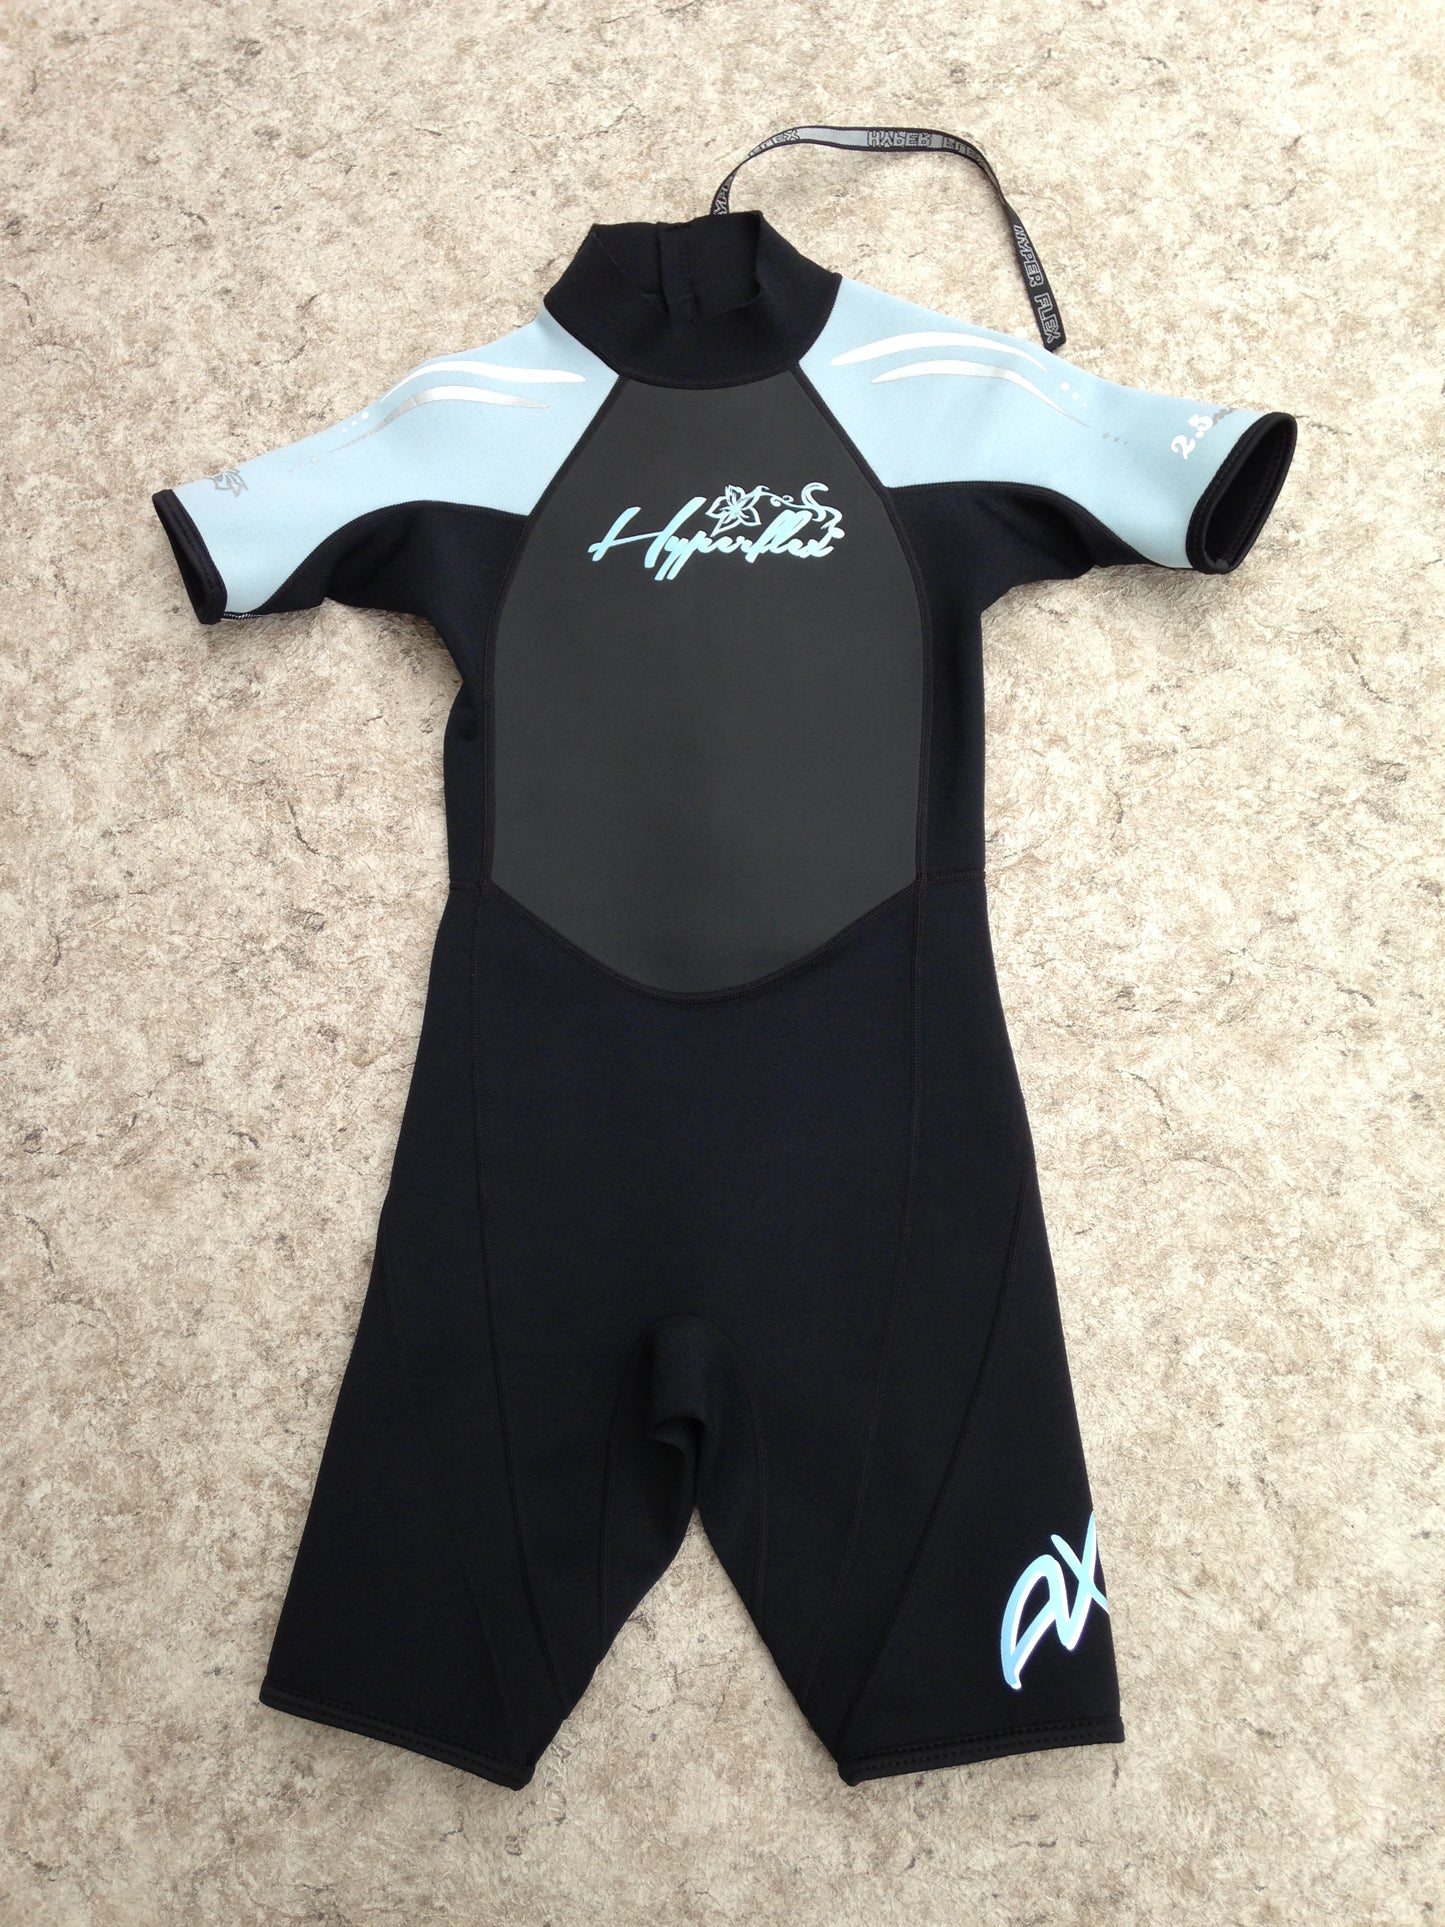 Wetsuit Child Size 12 Hyperflex Blue Black 2-3 mm New Demo Model